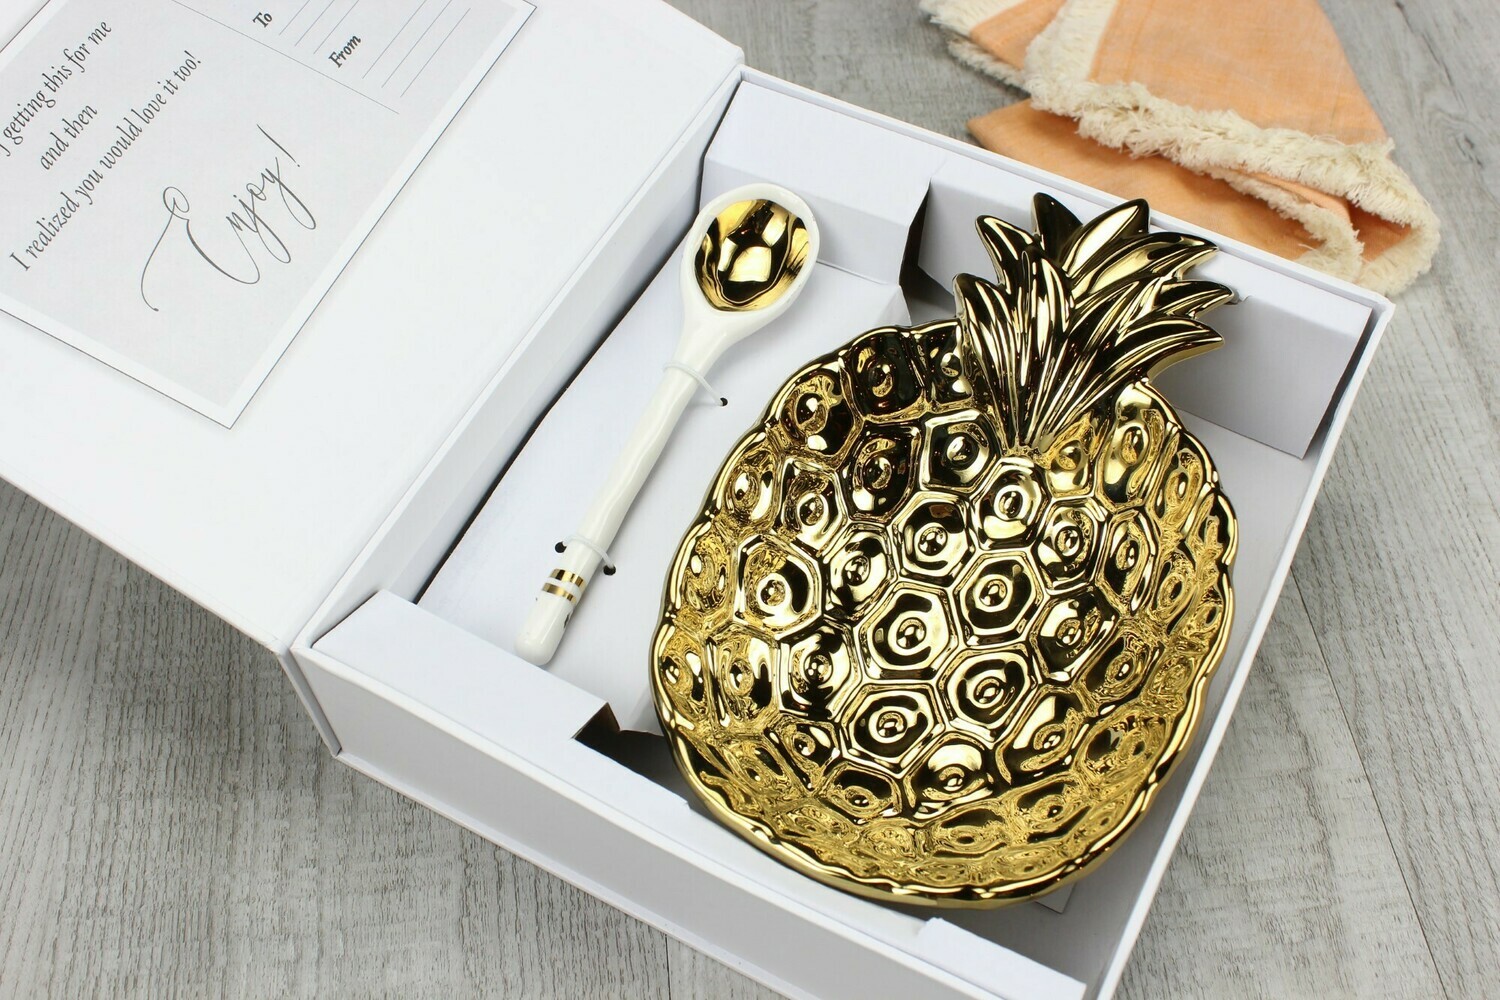 The Golden Pineapple Set